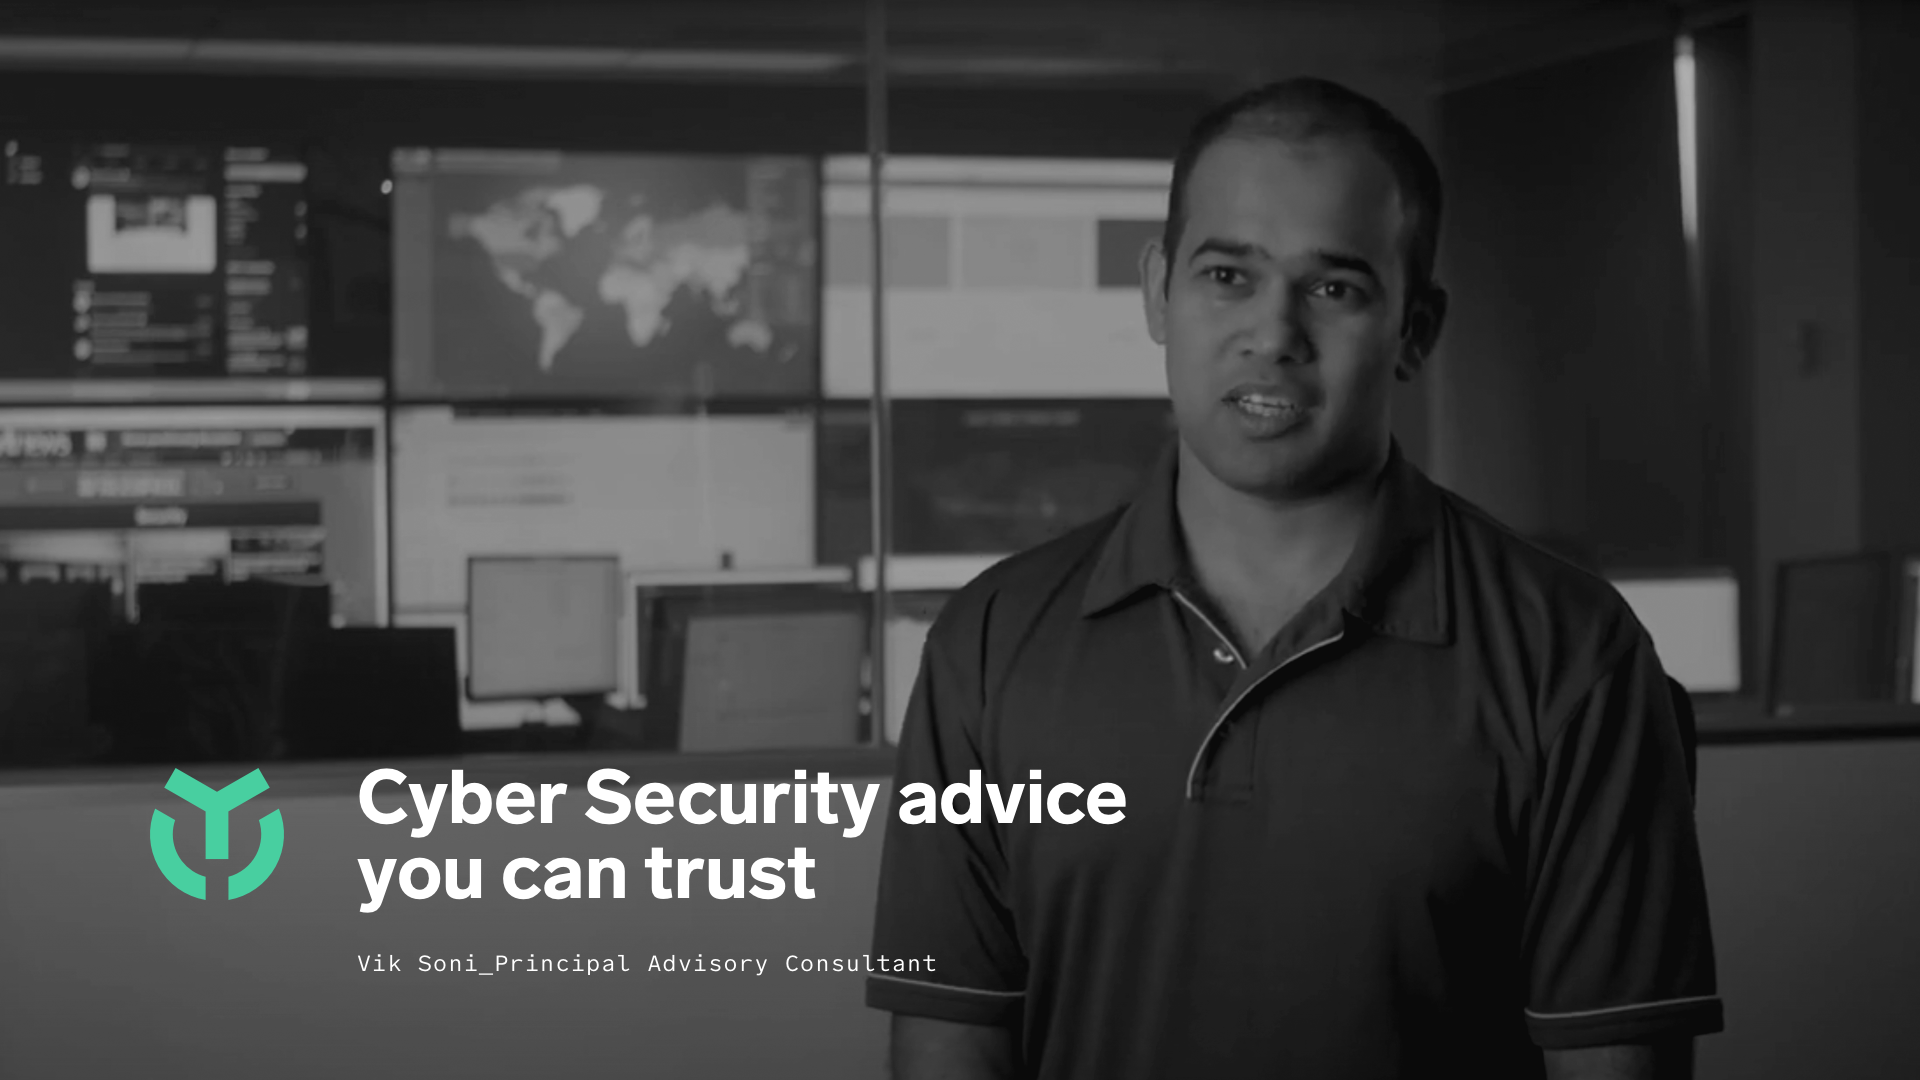 Video_Advisory _Cyber Security Copy